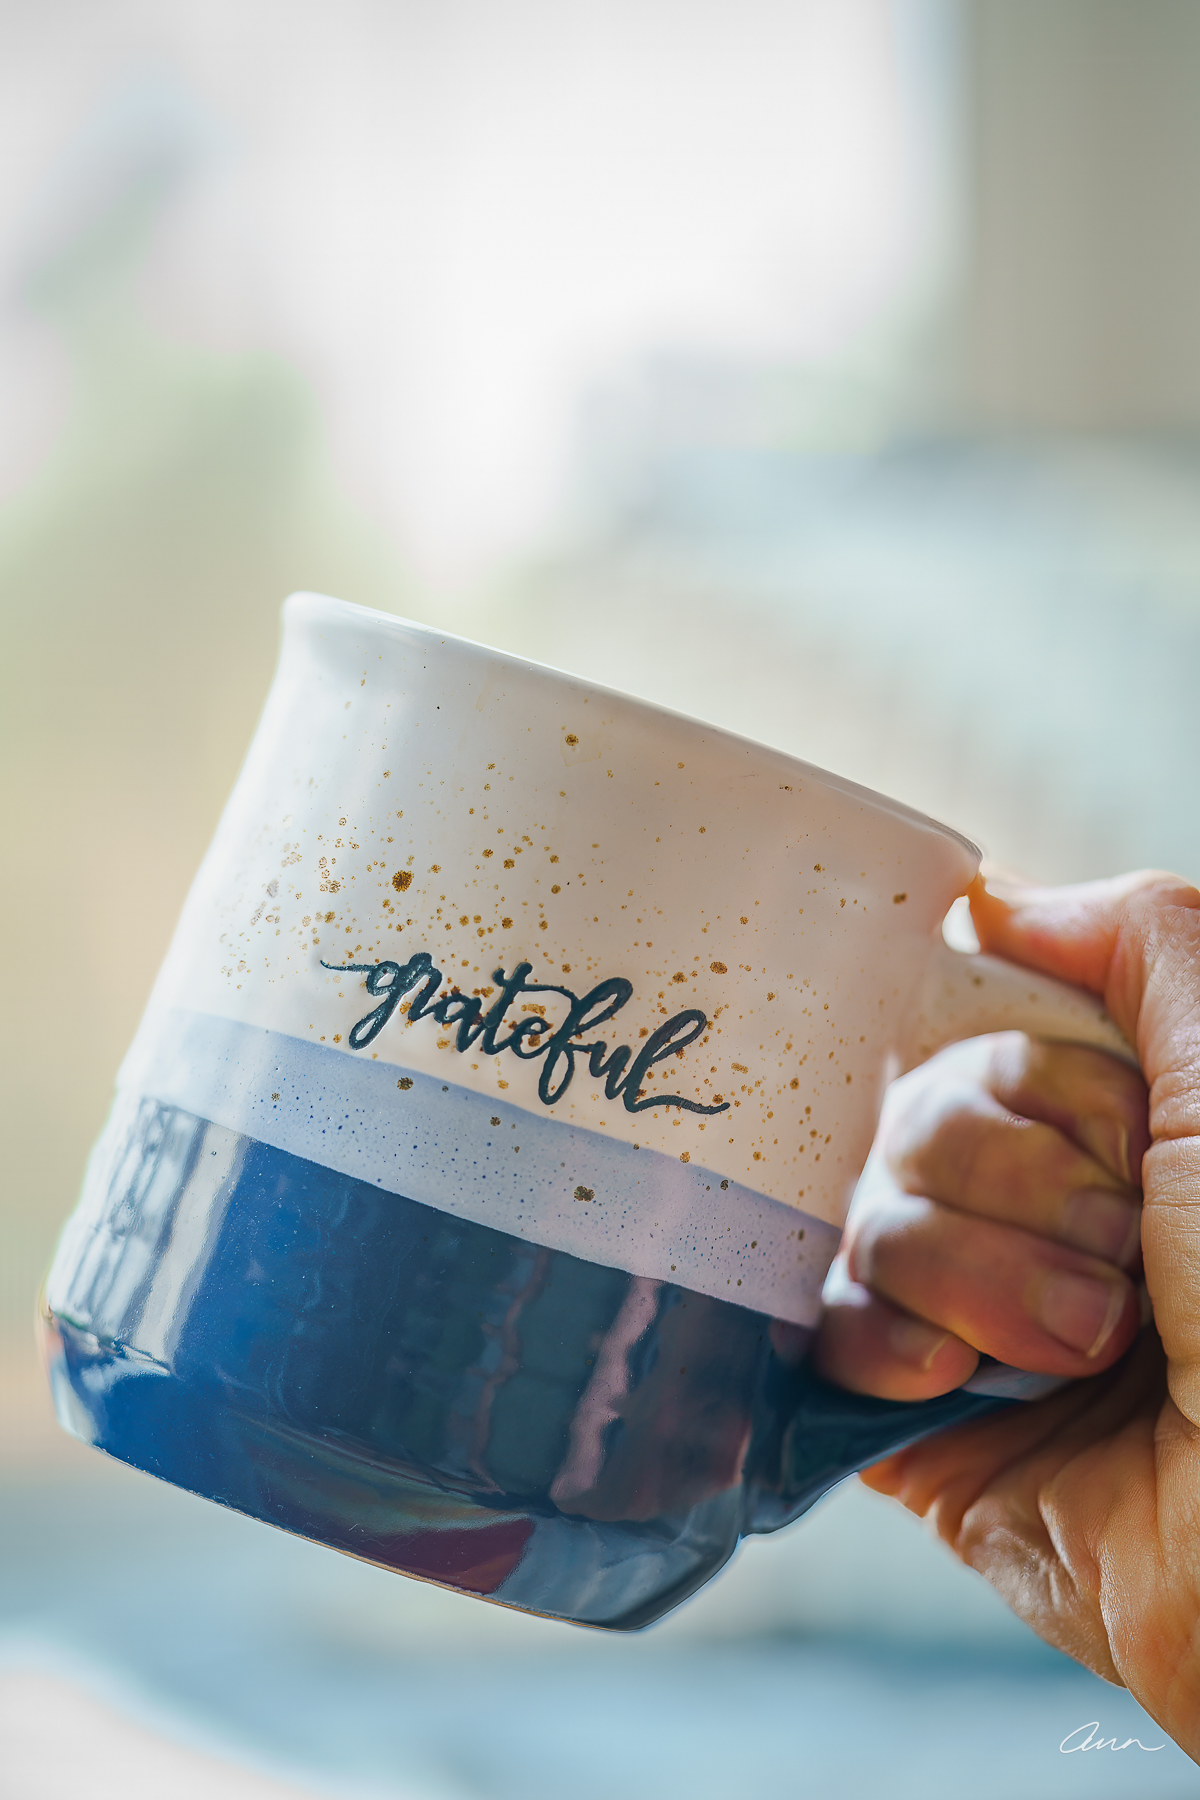 Coffee mug with word grateful